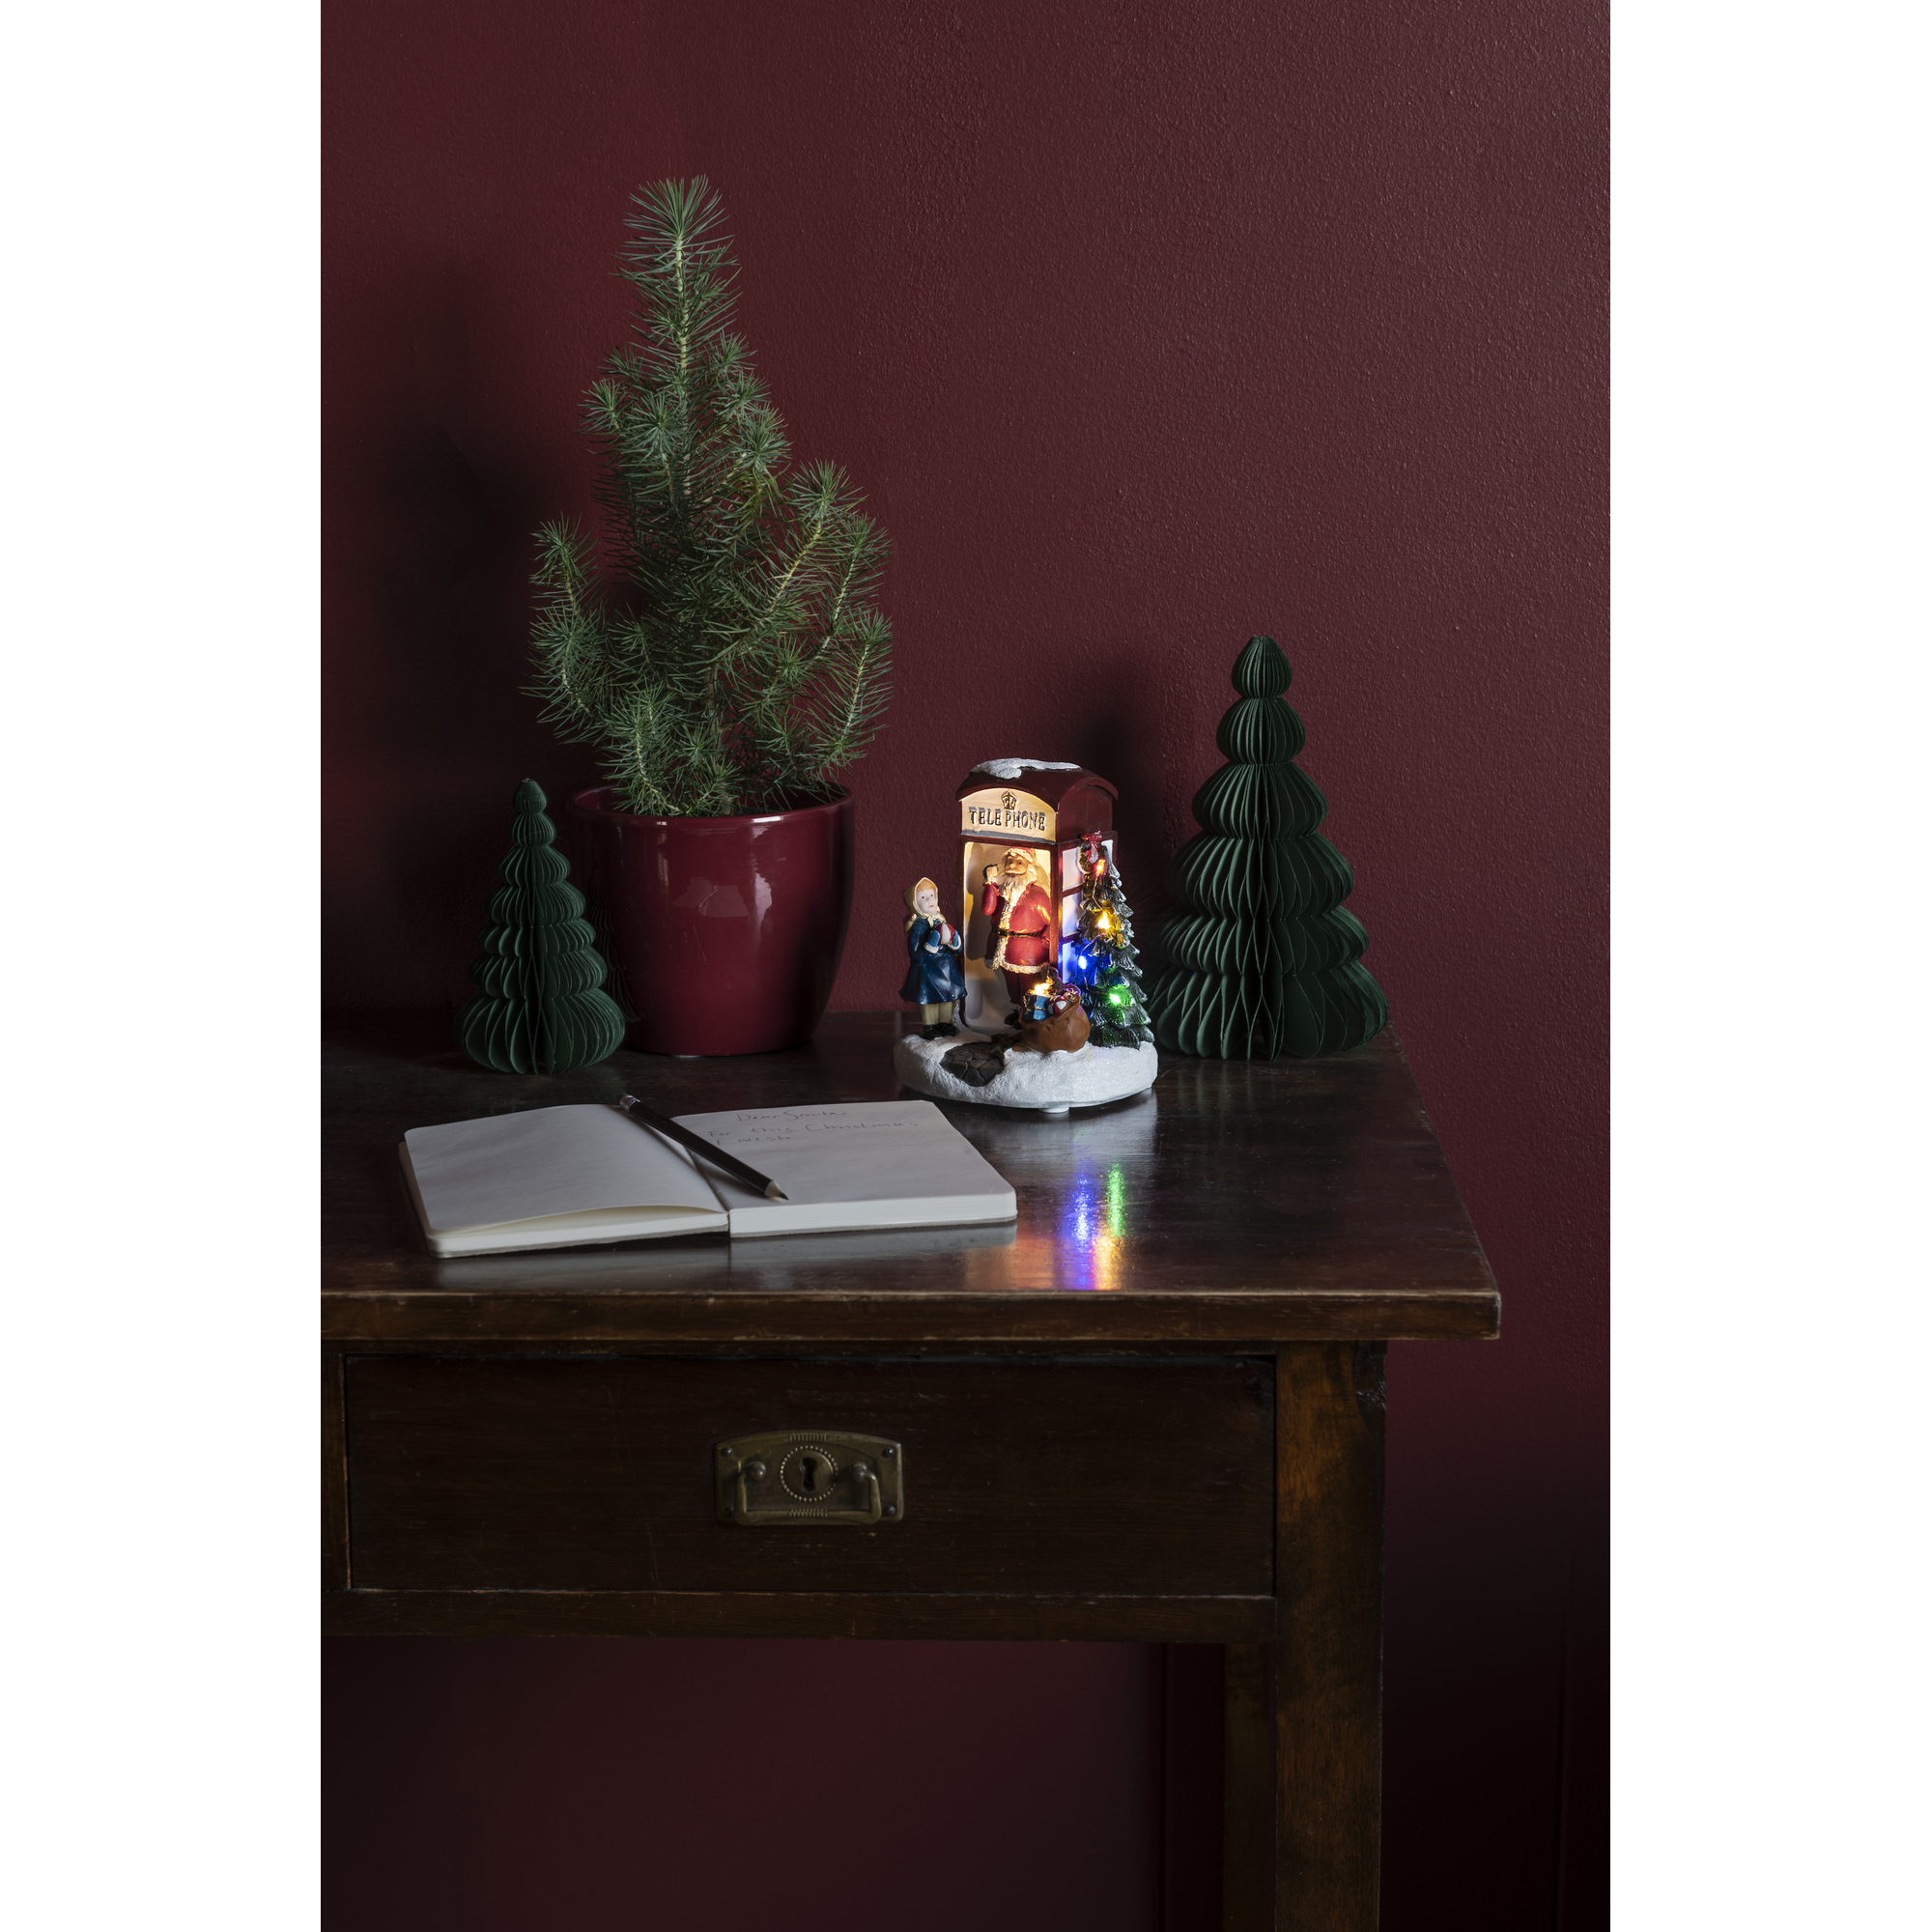 LED-Szenerie 'Weihnachtsmann in Telefonzelle' 5 LEDs bunt 12,5 x 16,5 cm + product picture